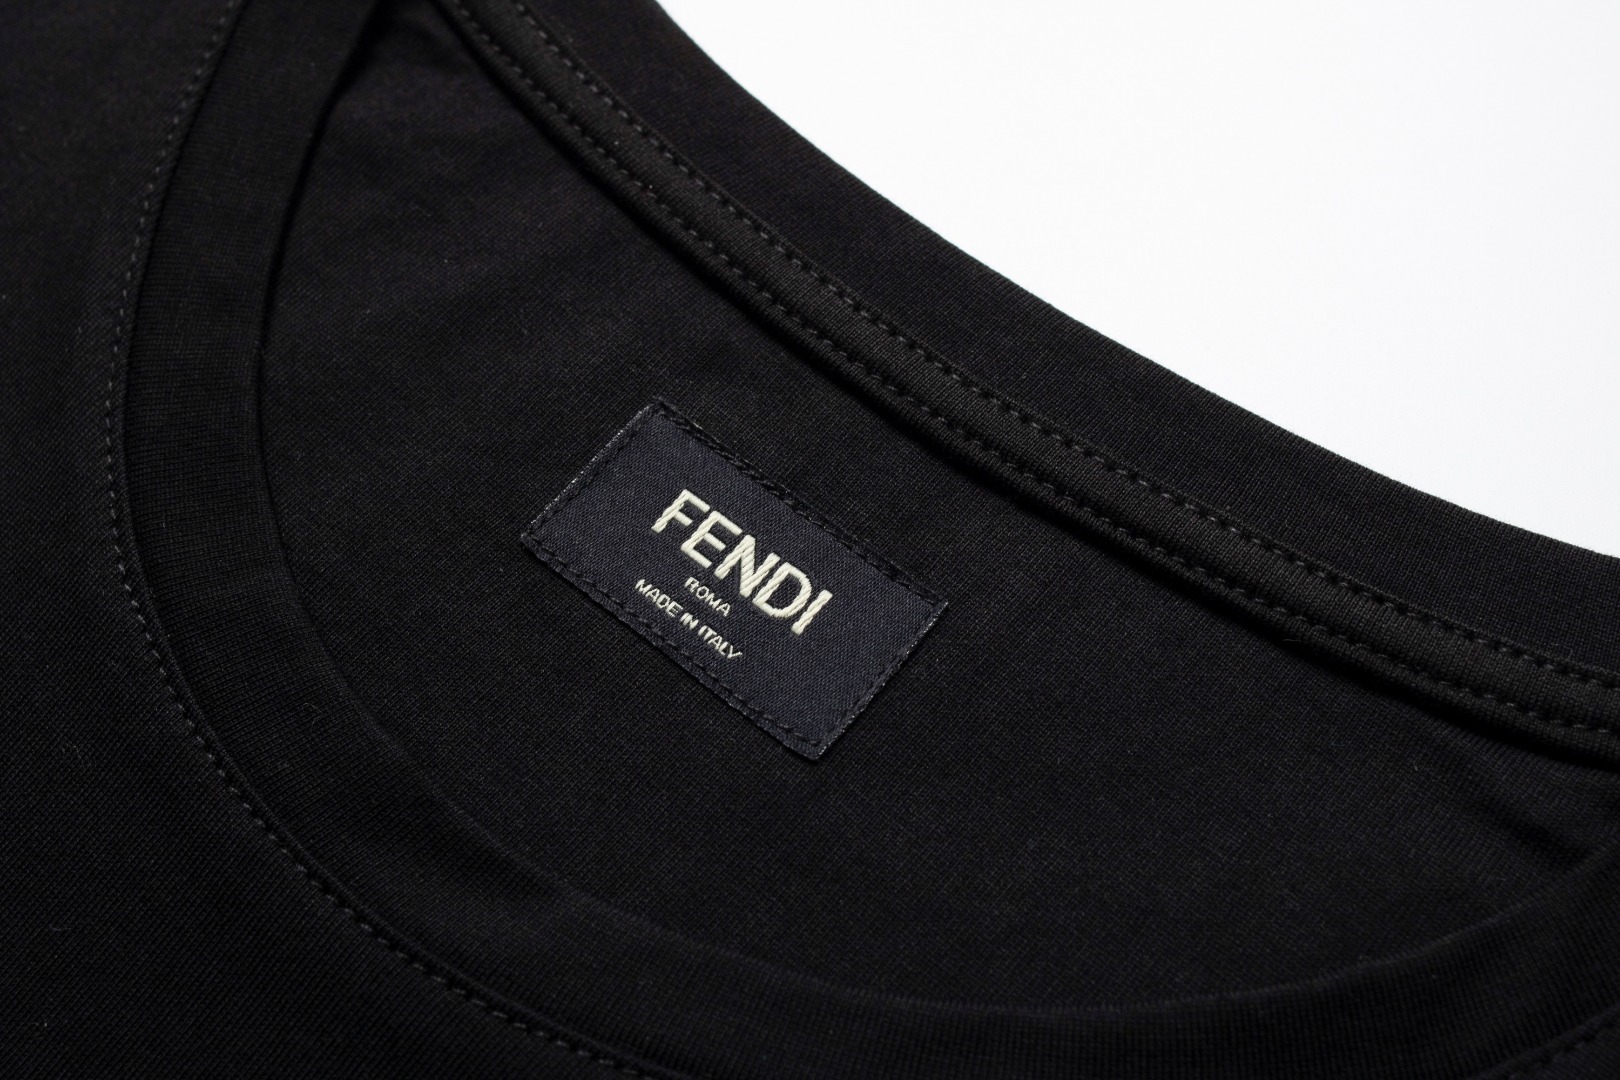 Fendi麂皮贴片T恤面料采用50支丝光双股克重190g手感柔软舒适亲肤搭配胸前Fendi麂皮贴片吸引眼